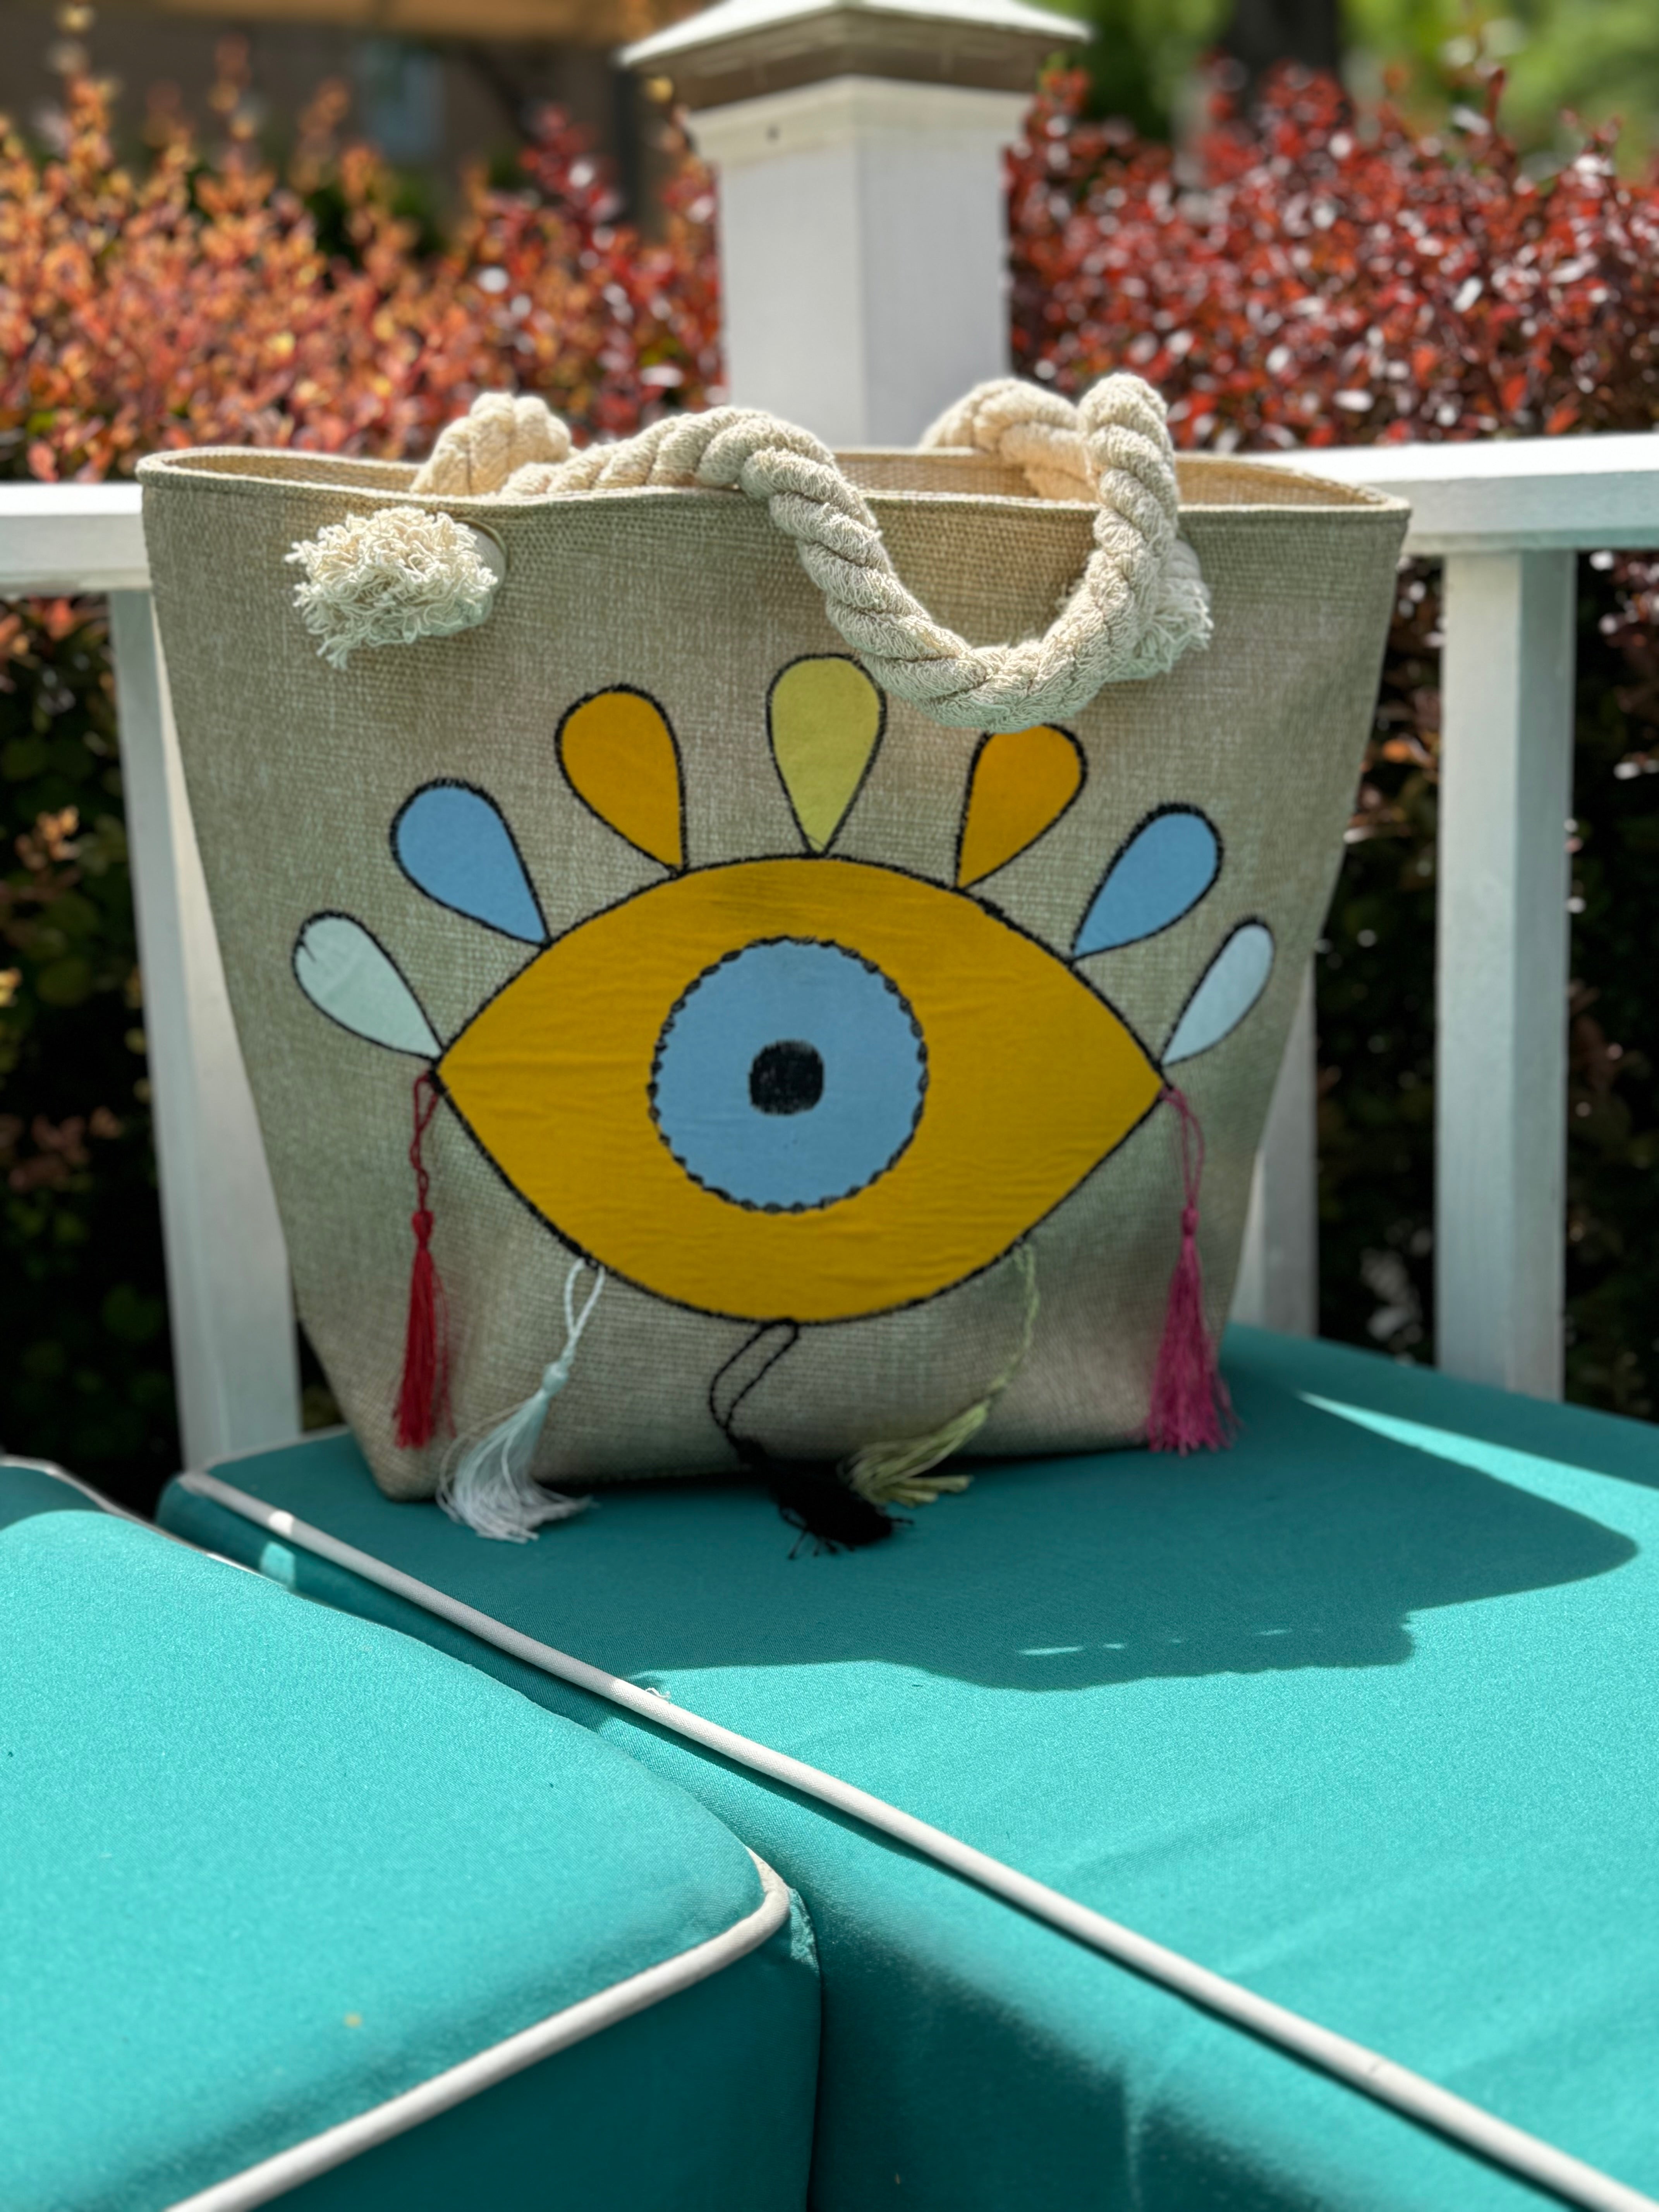 Beach bag with Yellow evil eye design